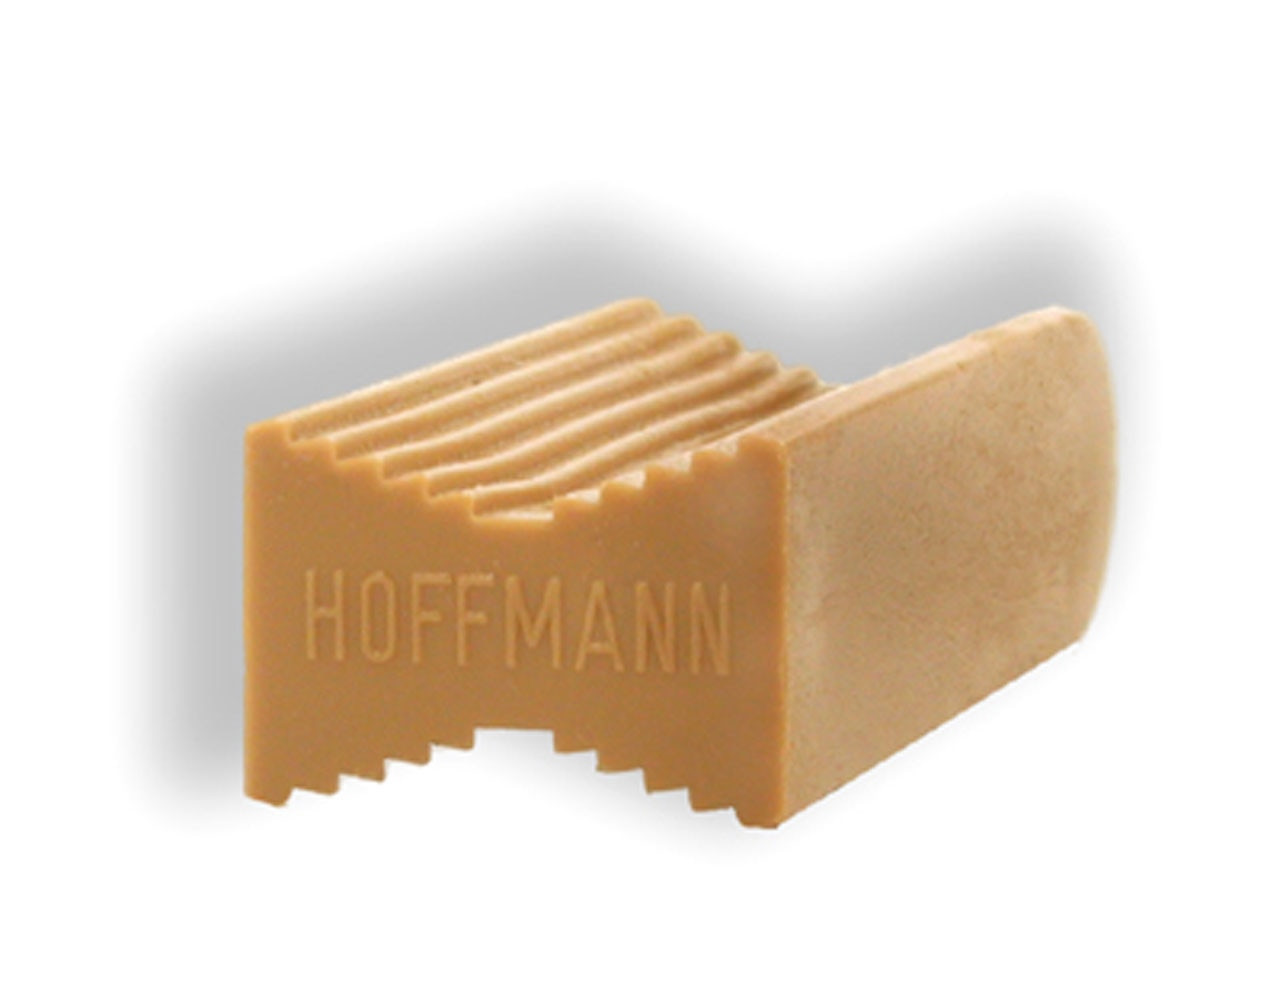 Hoffmann W-3 Dovetail Key, brown plastic